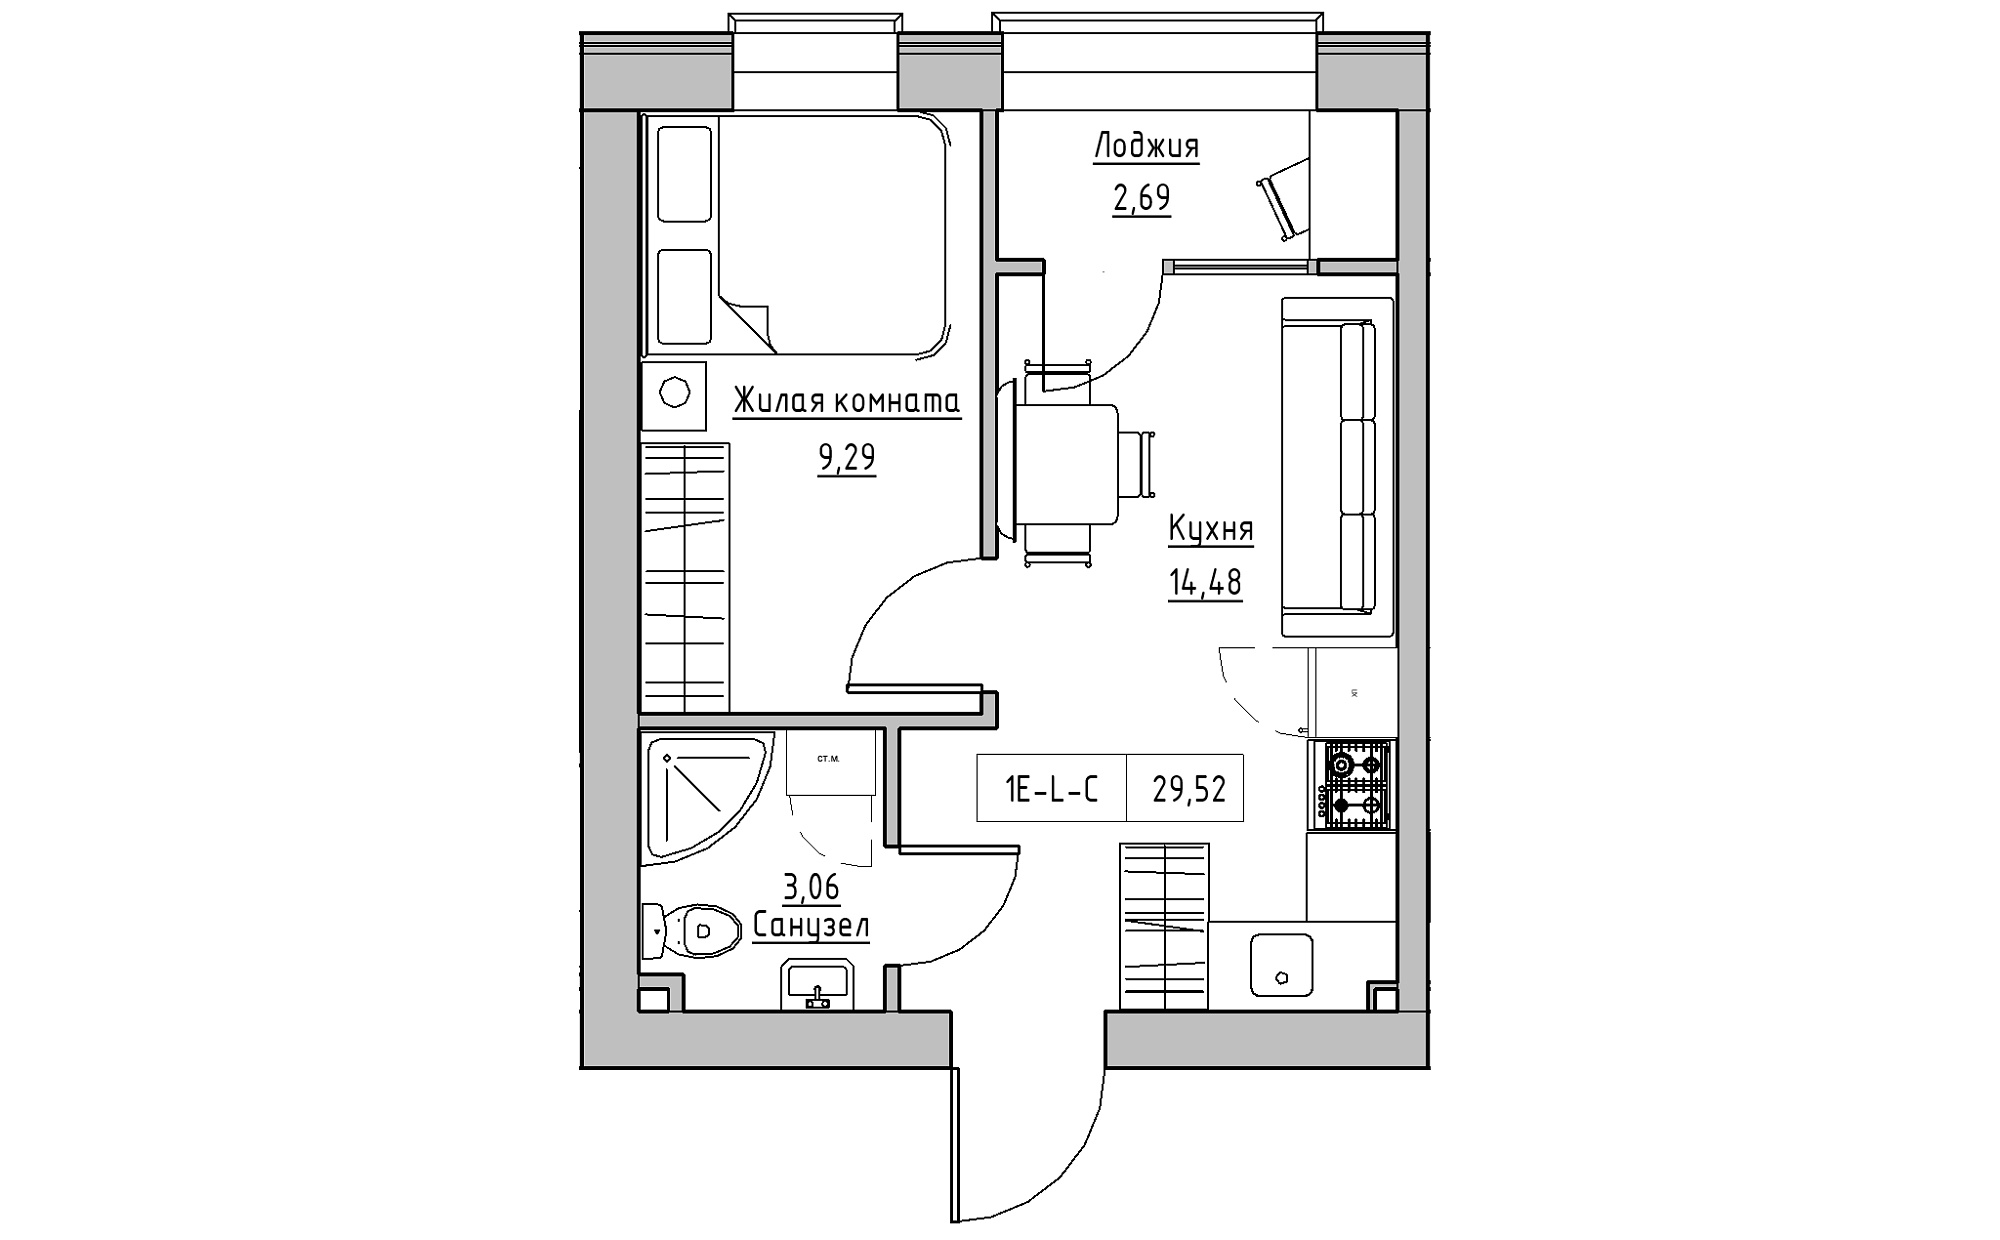 Planning 1-rm flats area 29.52m2, KS-022-03/0006.